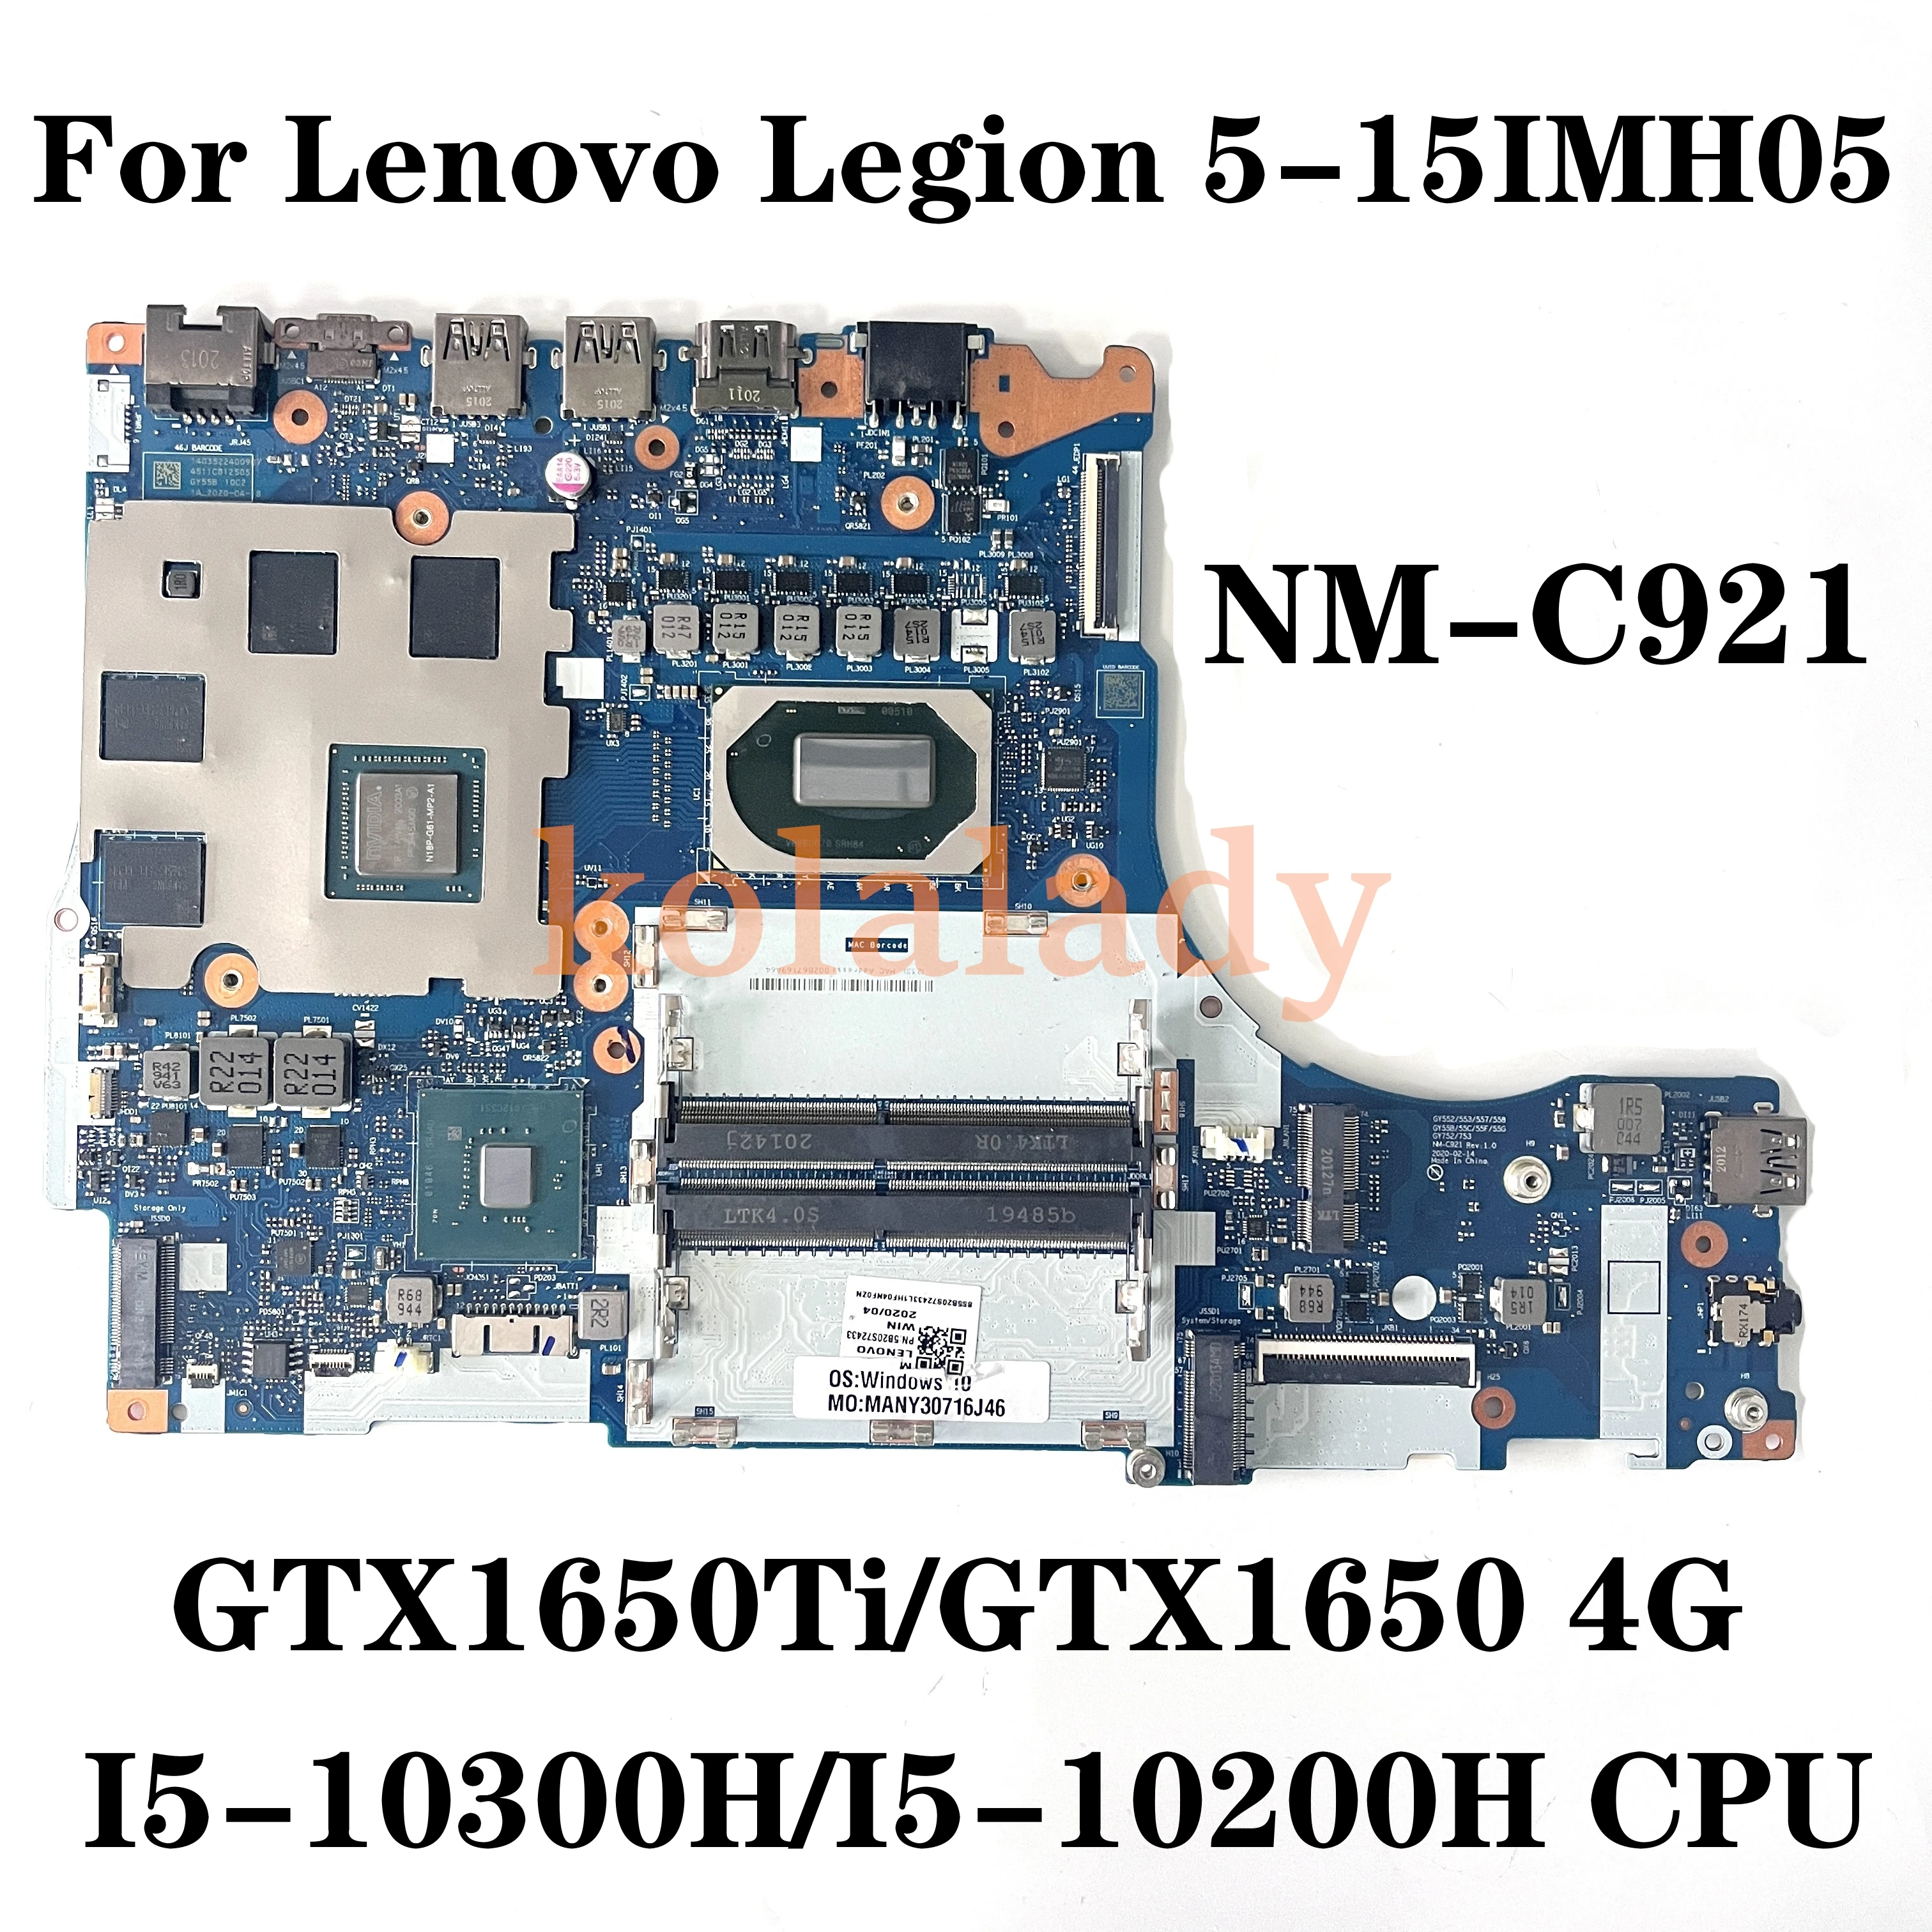 

NM-C921 Mainboard For Lenovo Legion 5-15IMH05 Laptop Motherboard W/ CPU I5-10300H/I5-10200H GPU GTX1650/GTX1650Ti 4G 5B20S72436